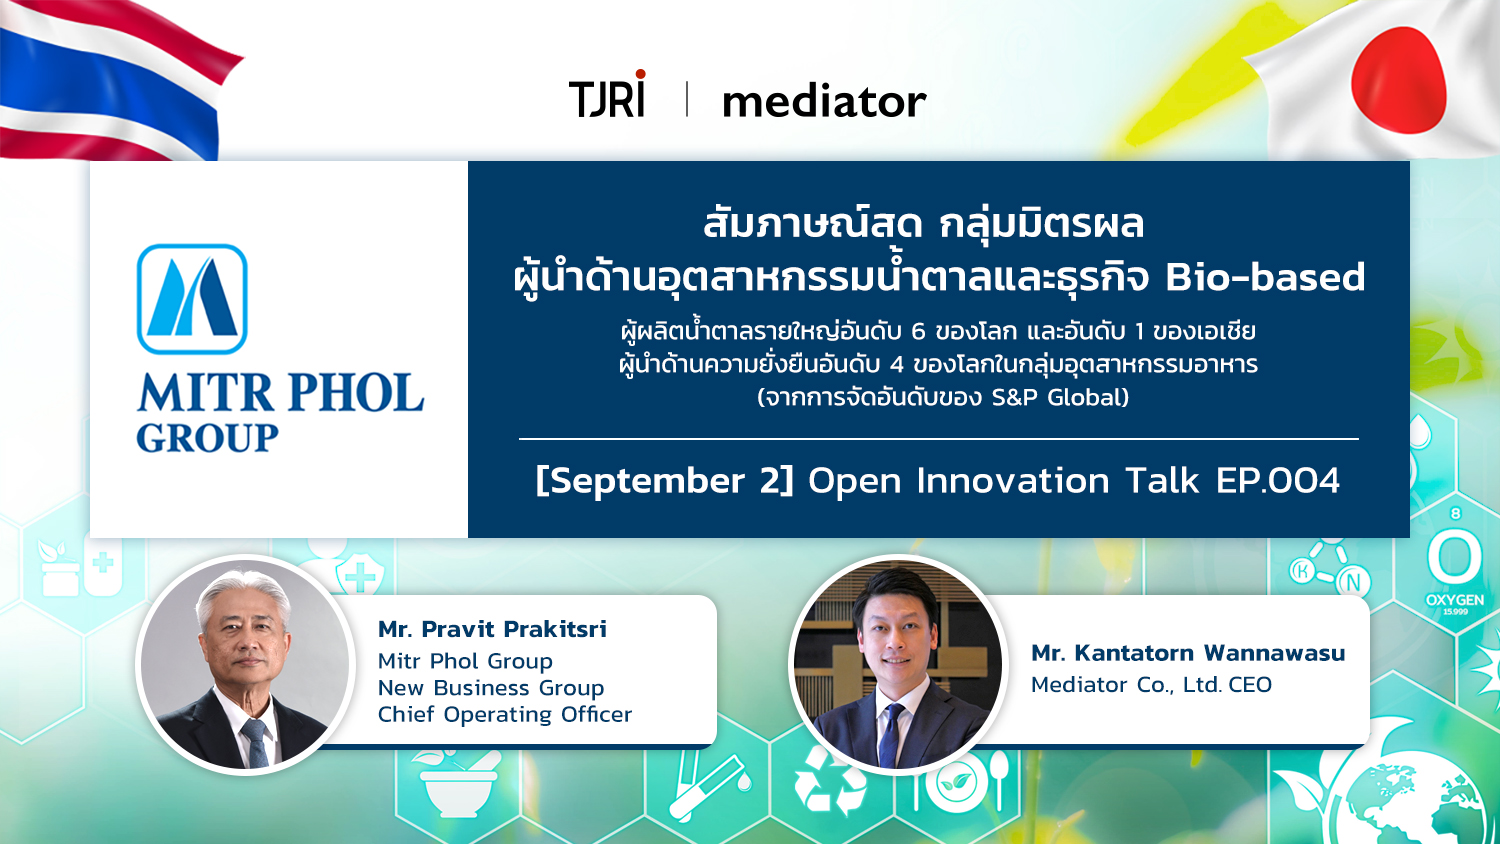 [Sep 2] Open Innovation Talk EP.004 | Mitr Phol Groupのメイン画像